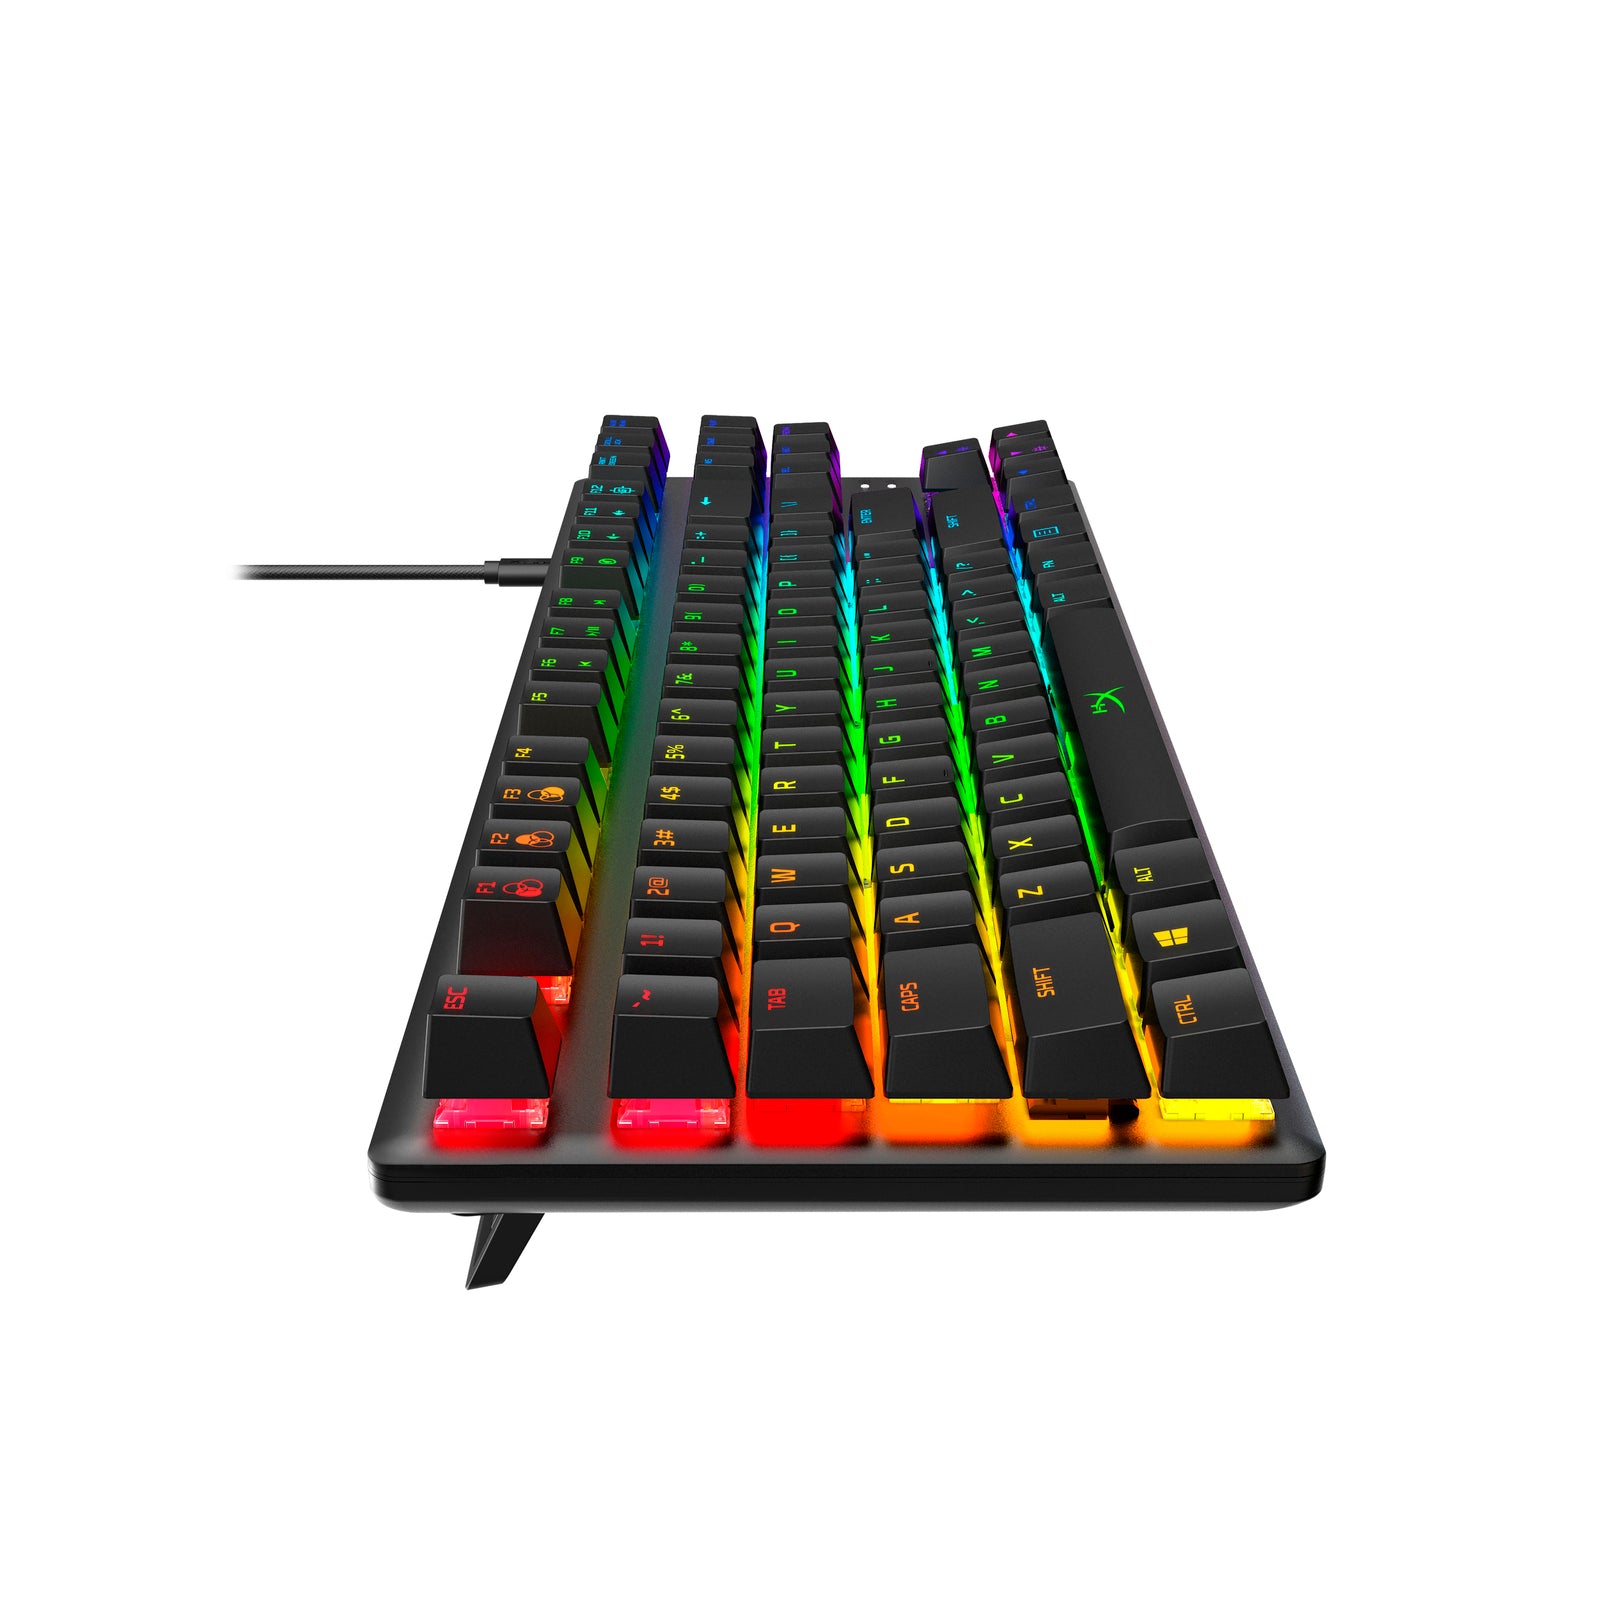 Alloy Origins Core Tenkeyless Mechanical Gaming Keyboard | HyperX ...